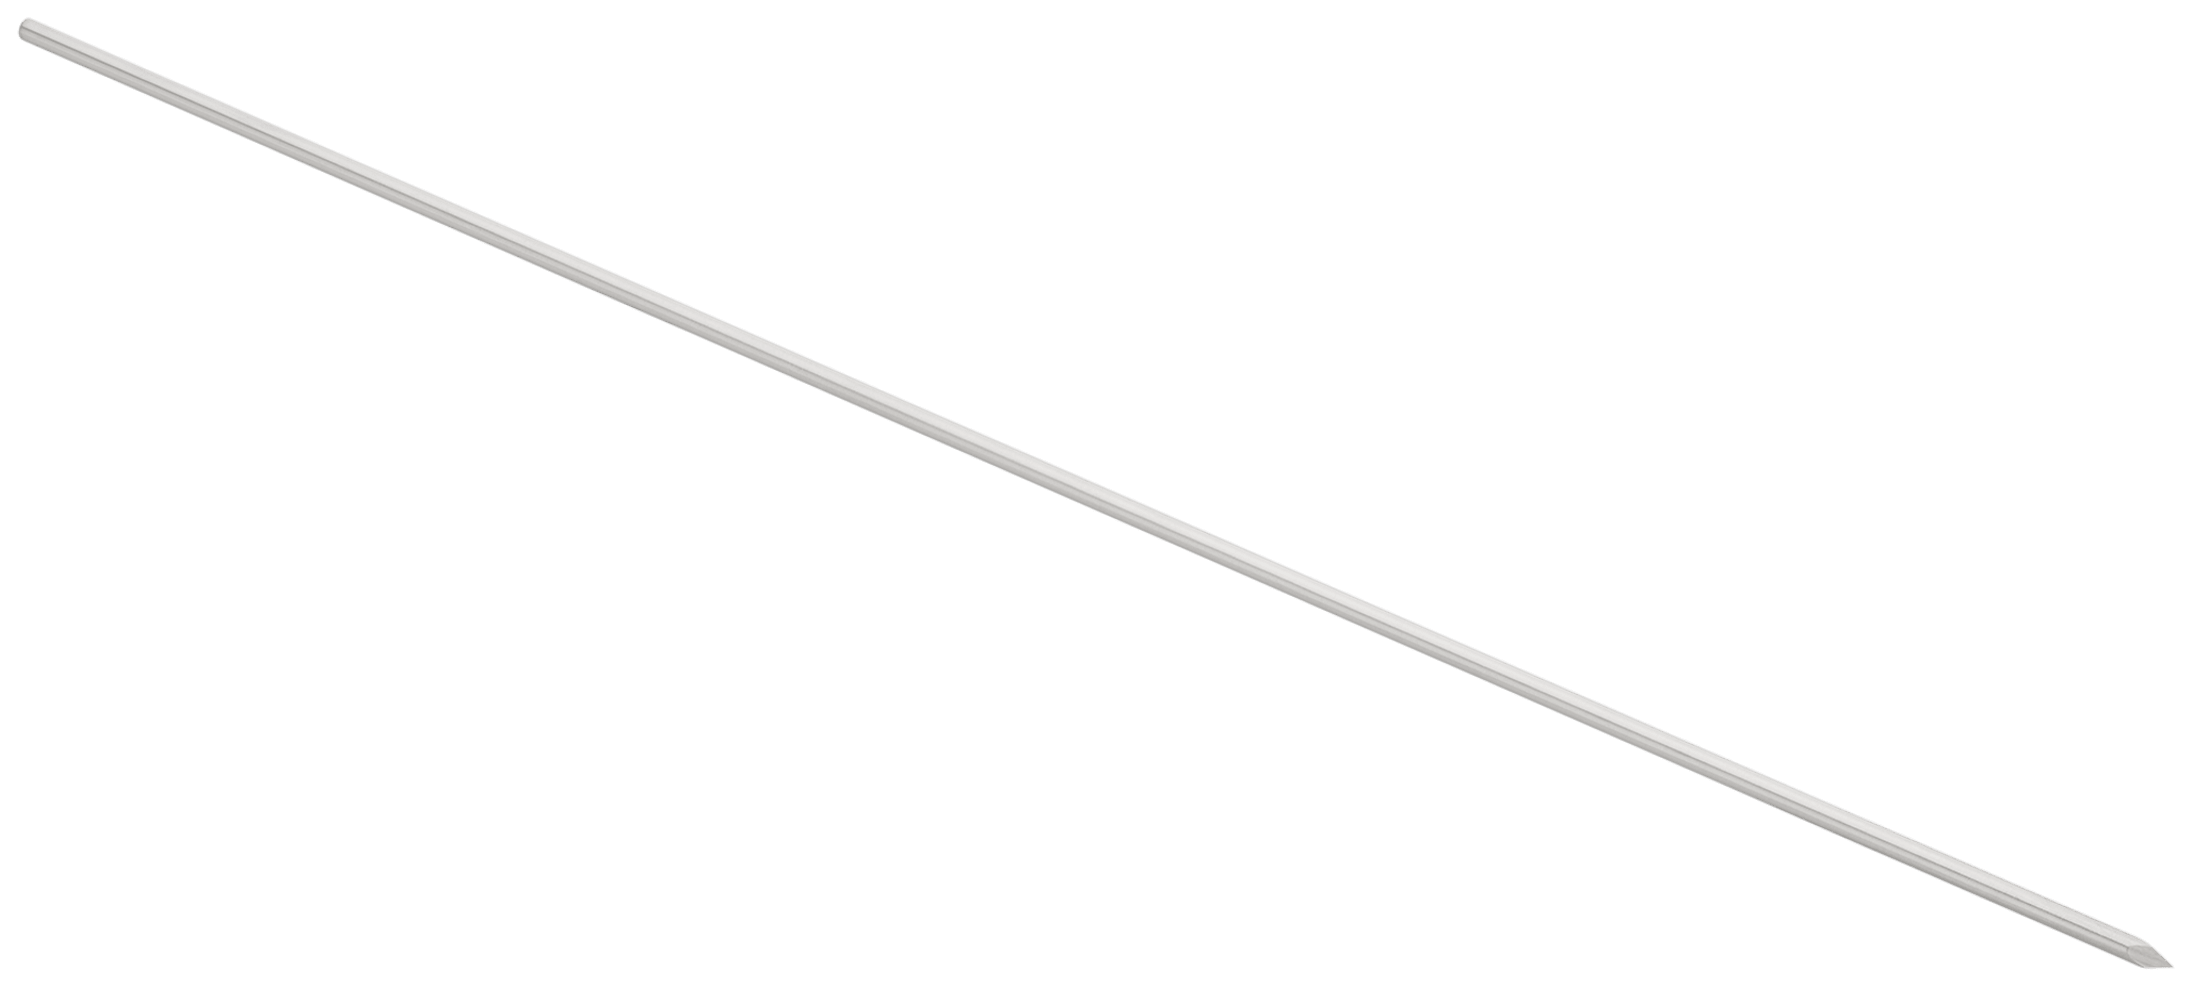 Nitinolführungsdraht, mit Trokarspitze, 2.35 mm x 235 mm, steril